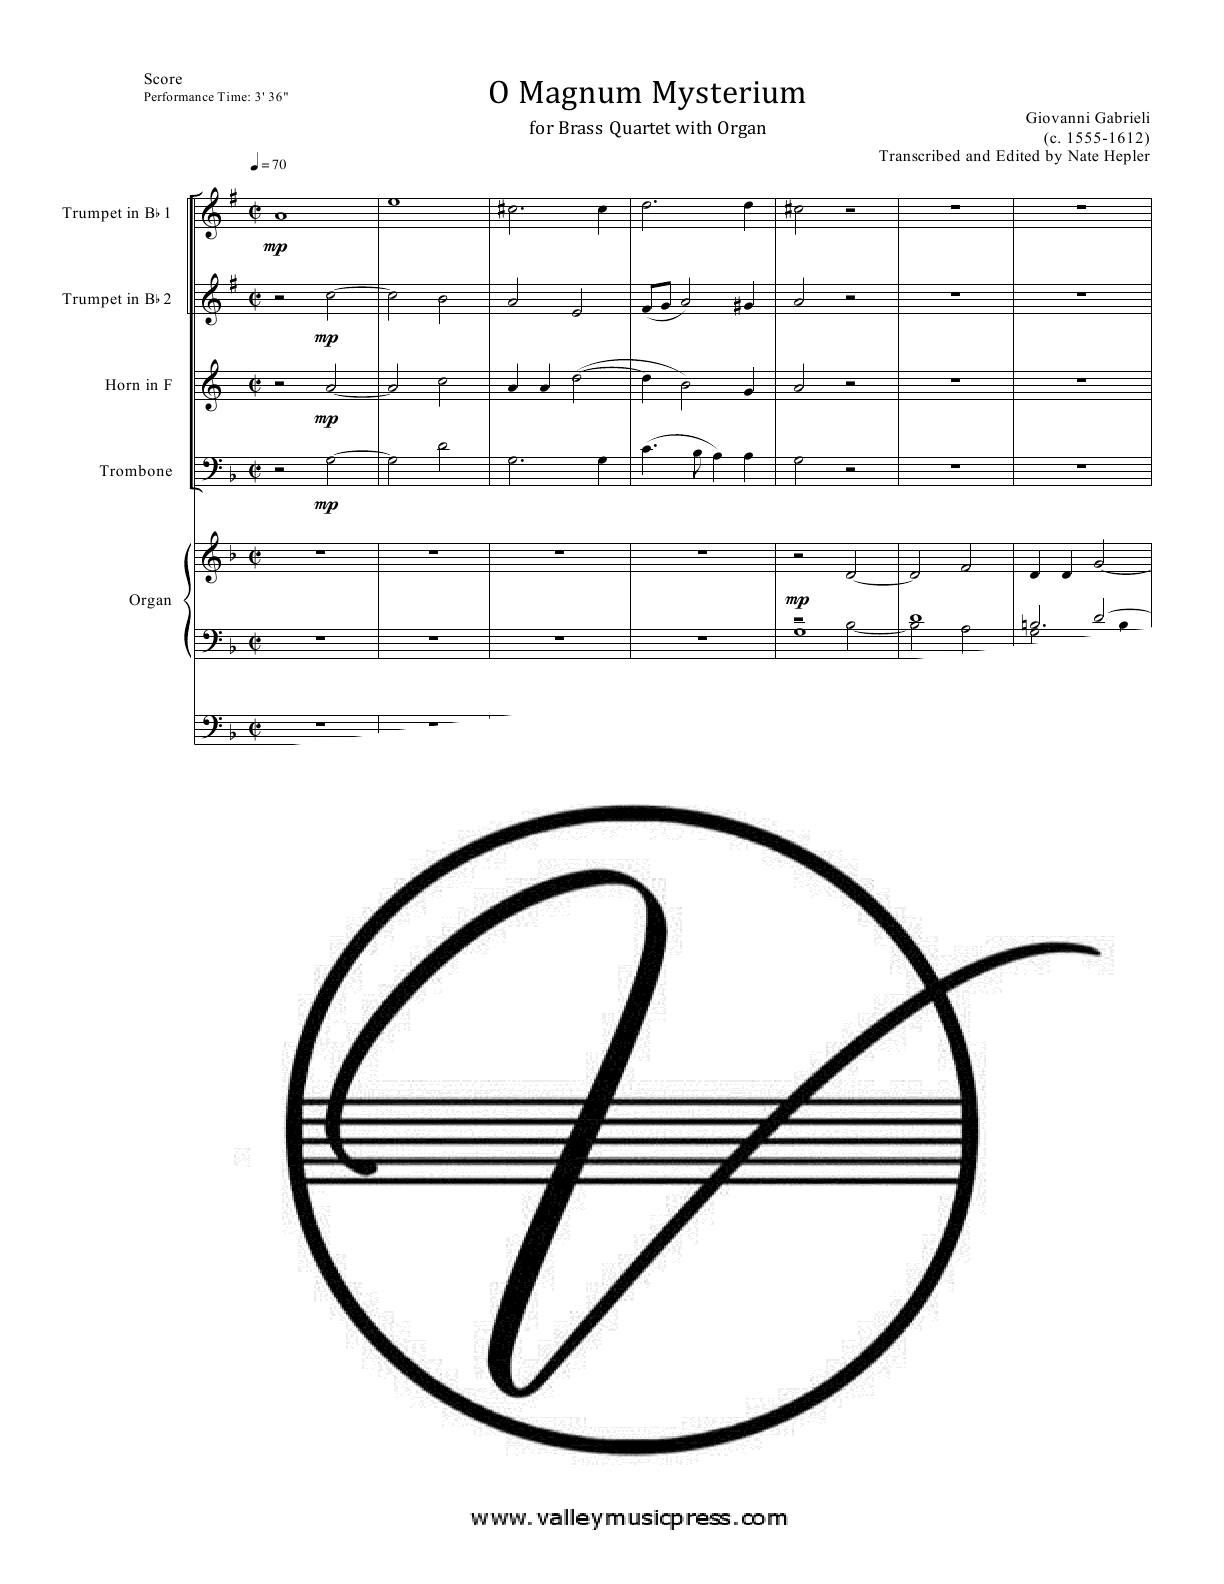 Gabrieli - O Magnum Mysterium (Brass Quartet with Organ)